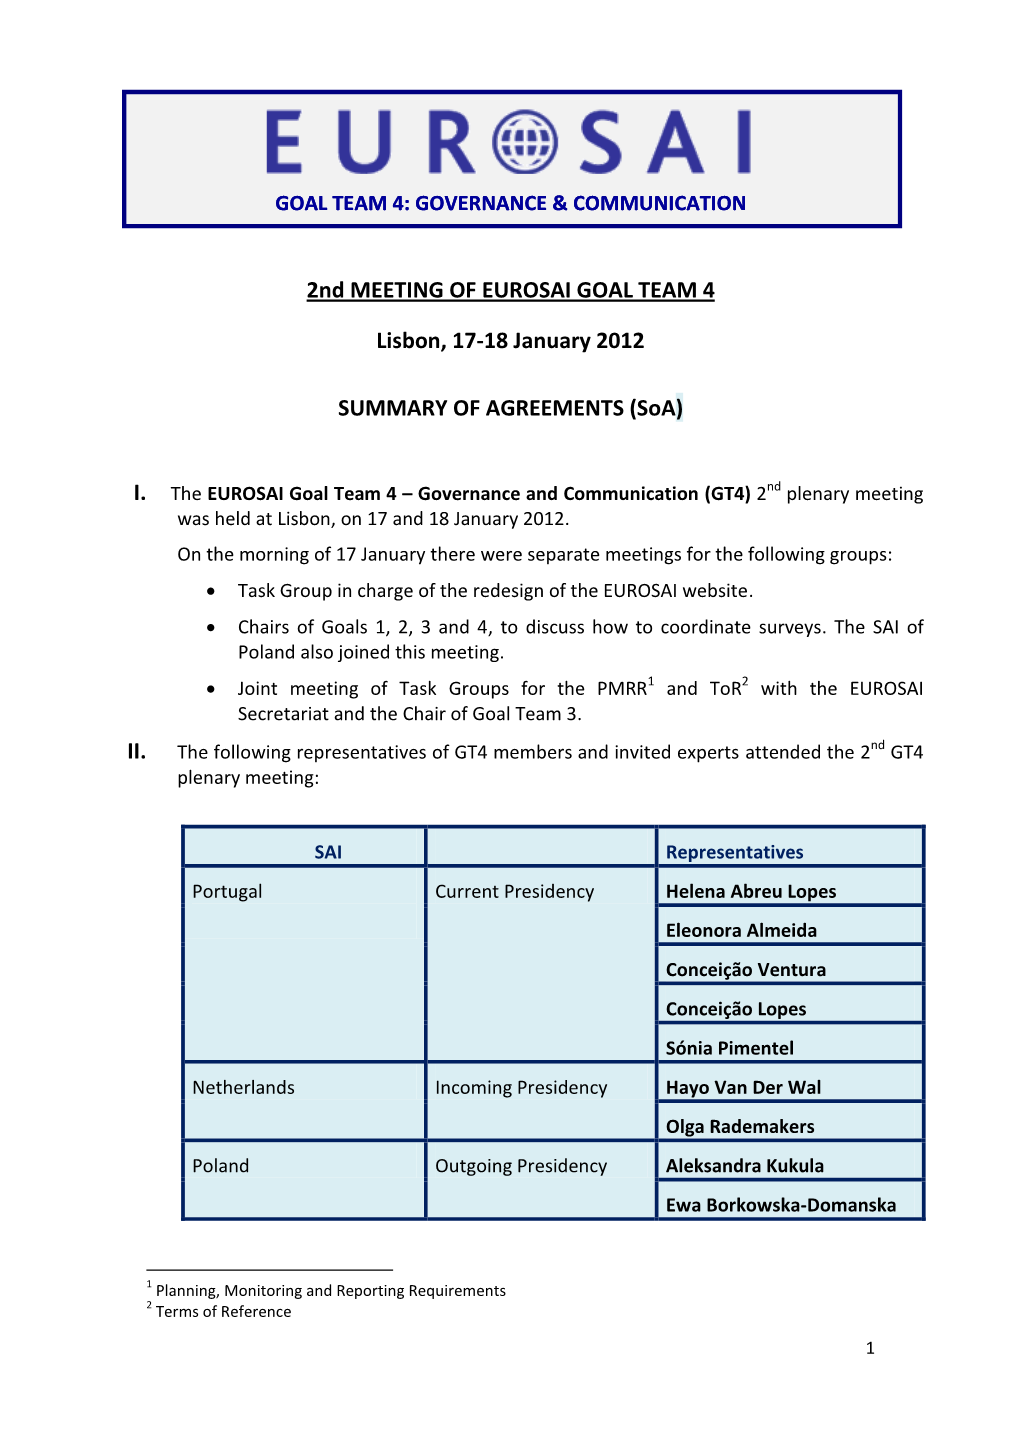 Summary of Agreements 2Nd Plenary Meeting of Goal Team 4